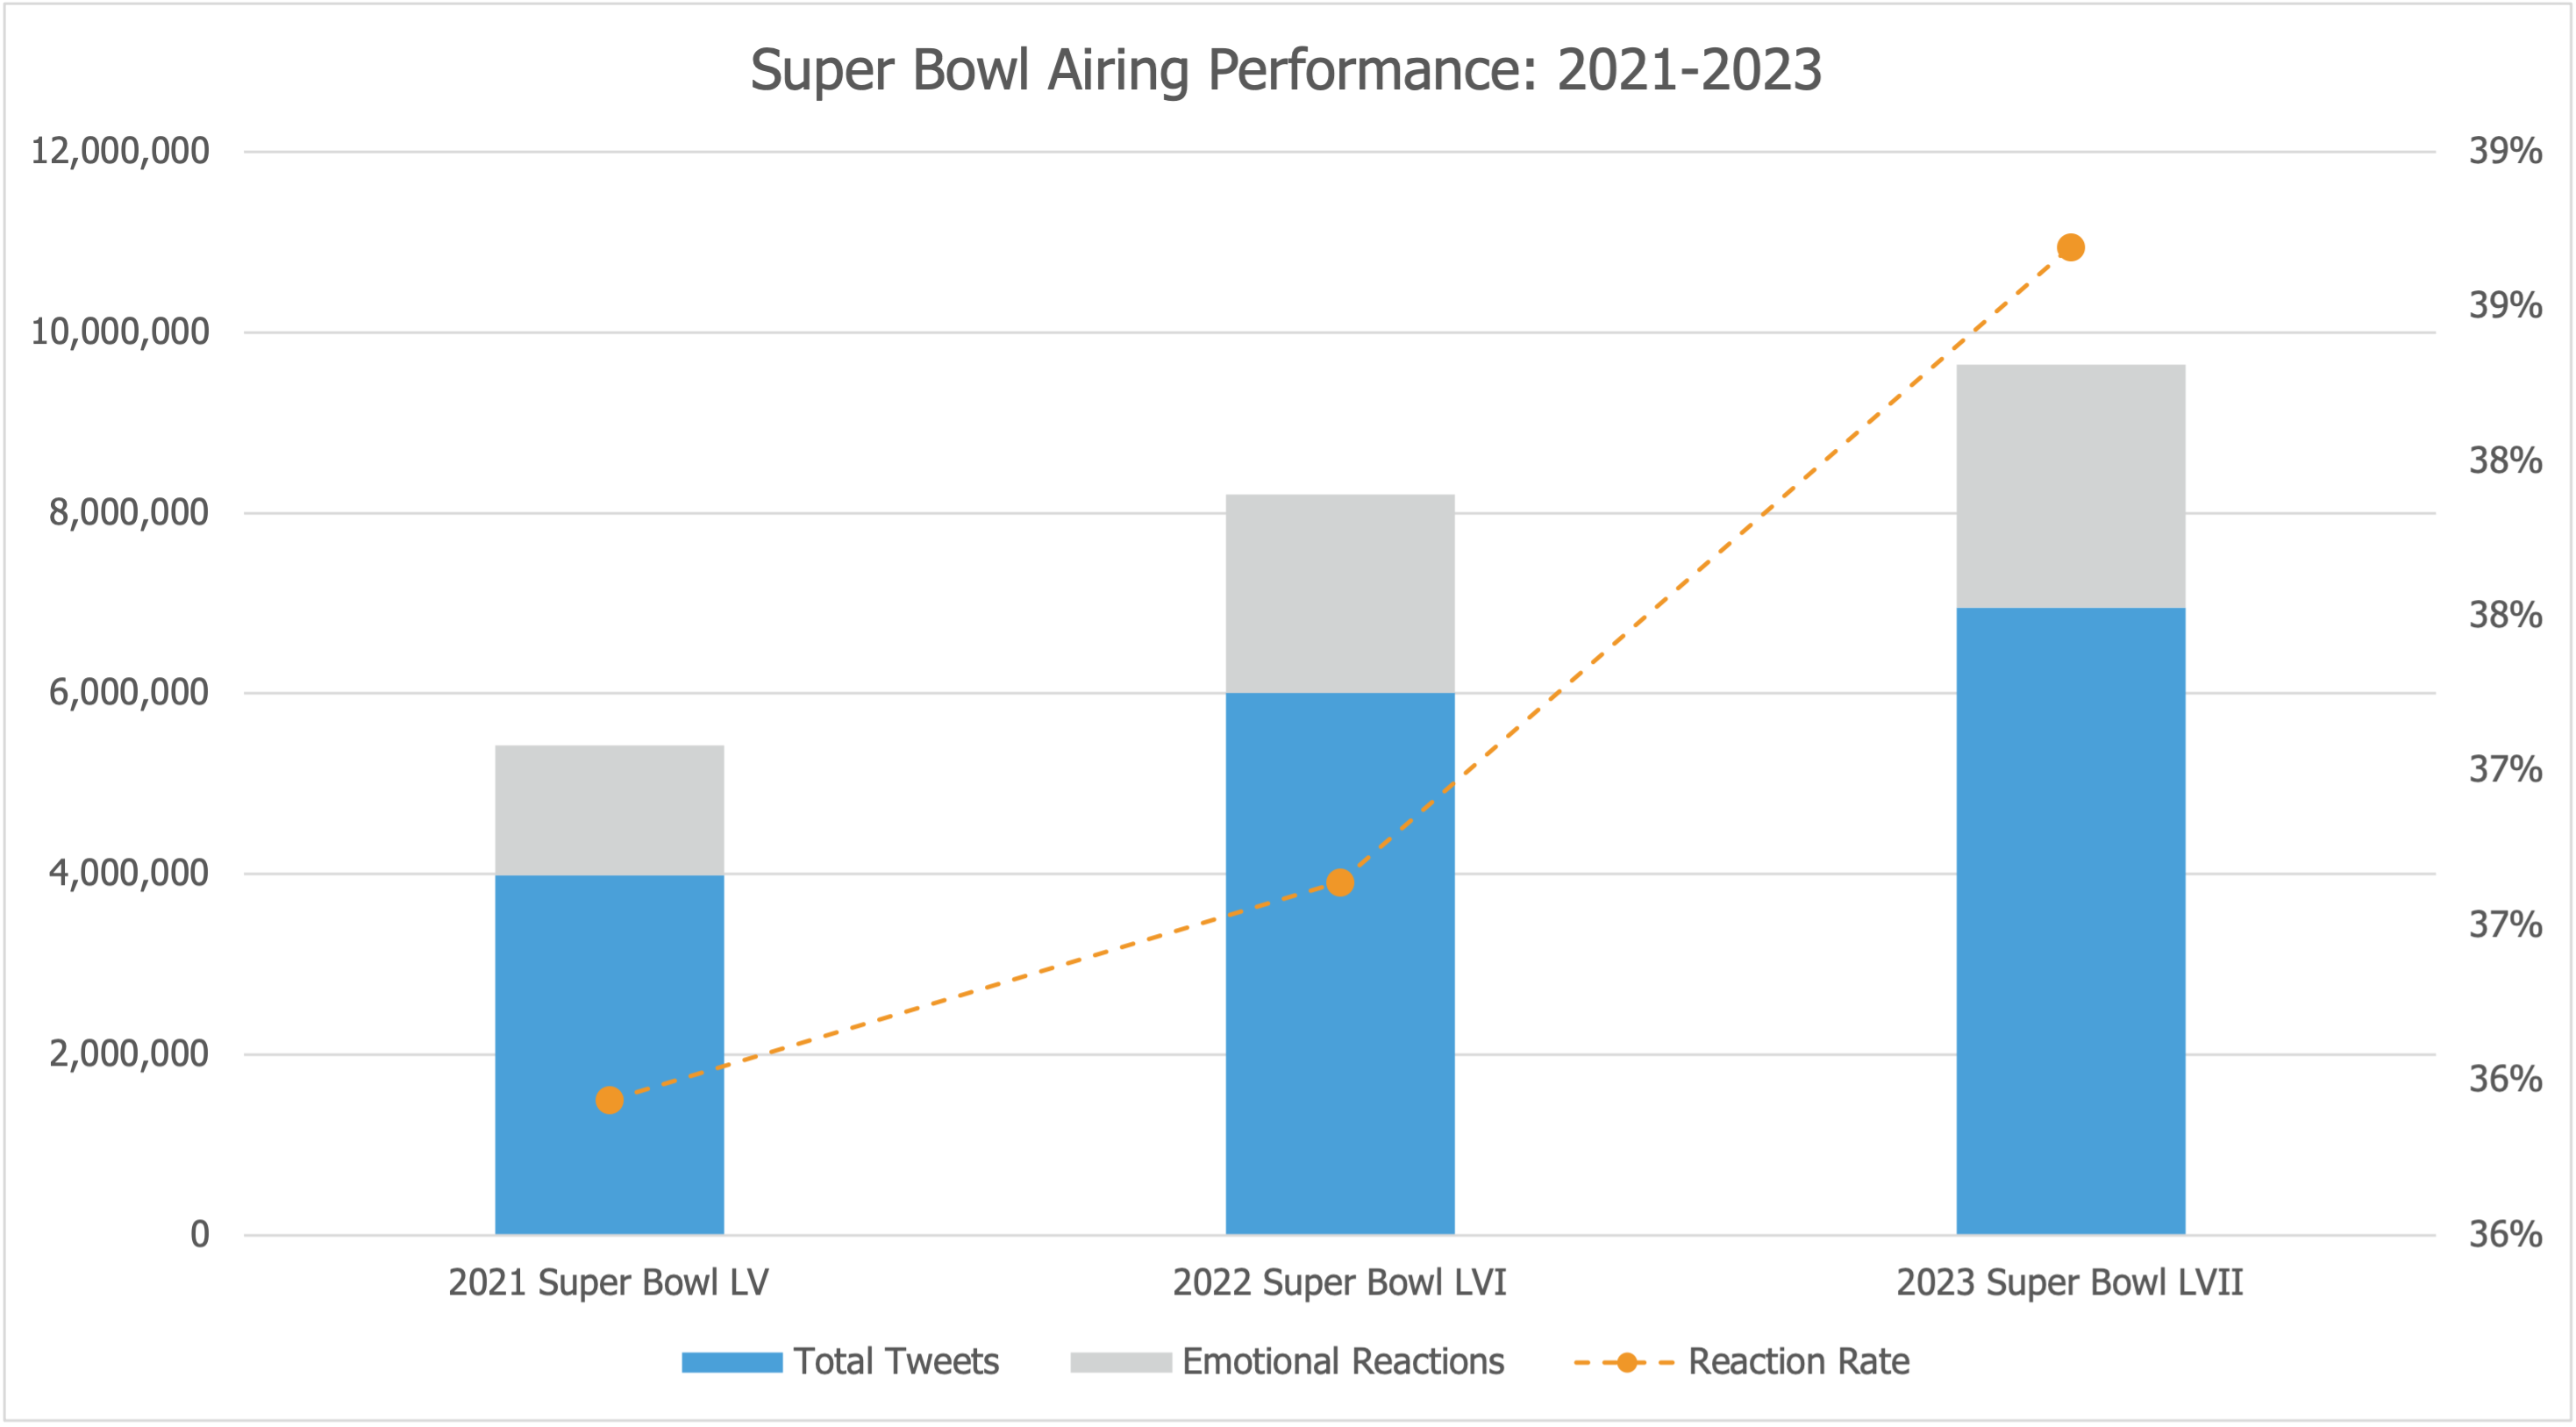 Super Bowl Airing Performance: 2021-2023